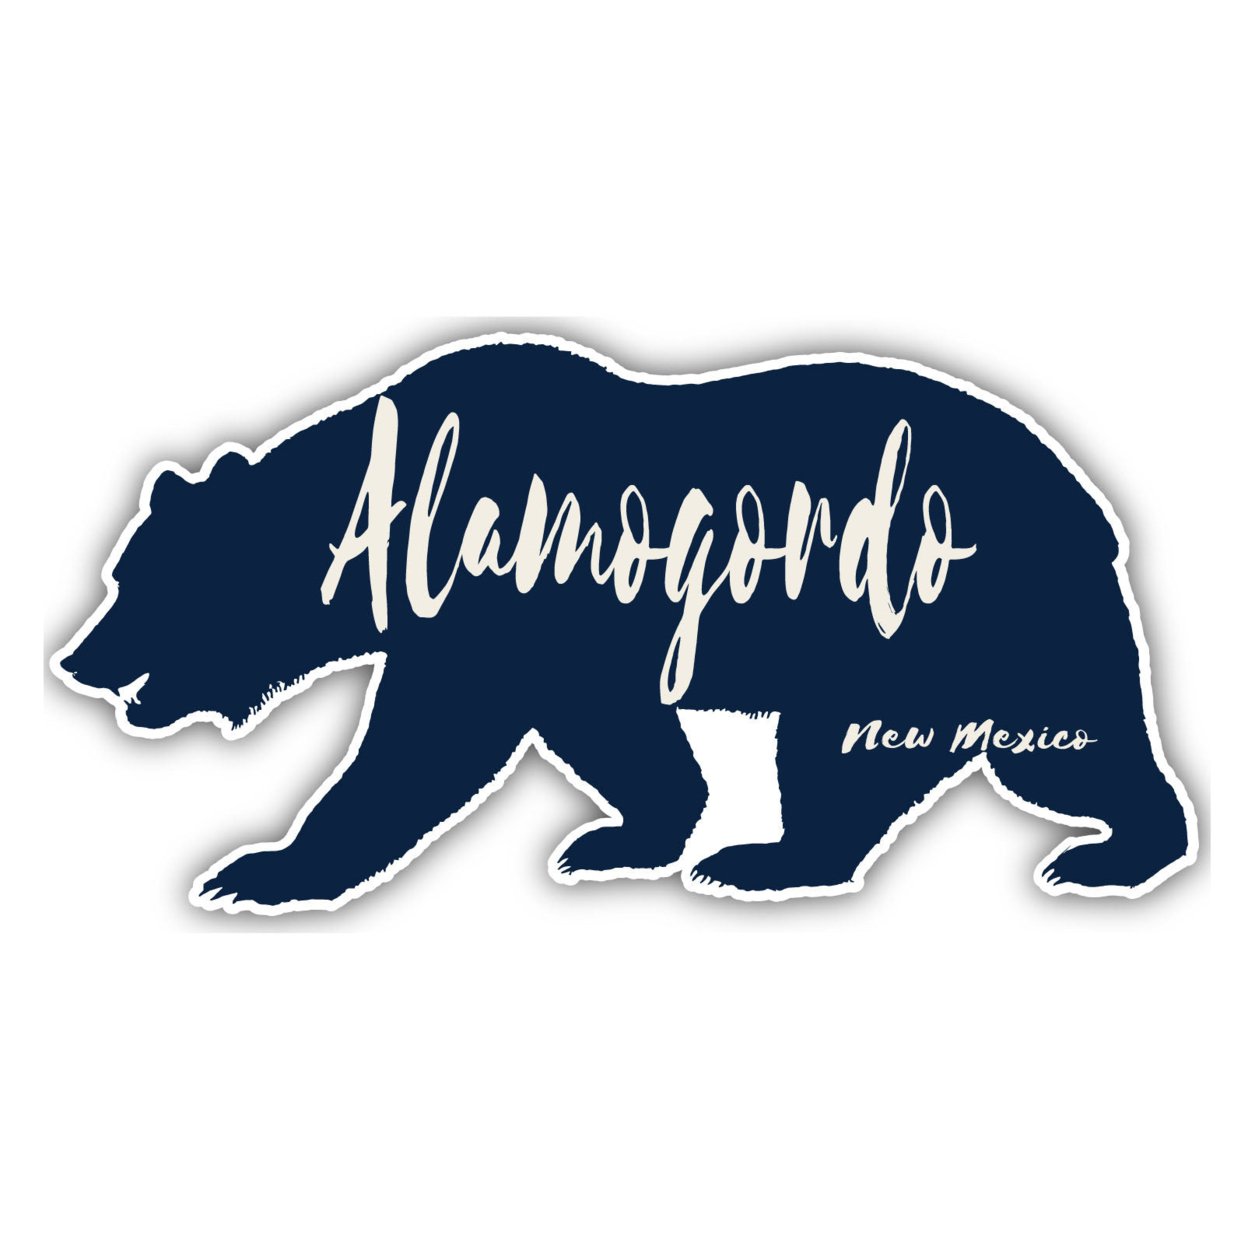 Alamogordo New Mexico Souvenir Decorative Stickers (Choose Theme And Size) - Single Unit, 6-Inch, Bear